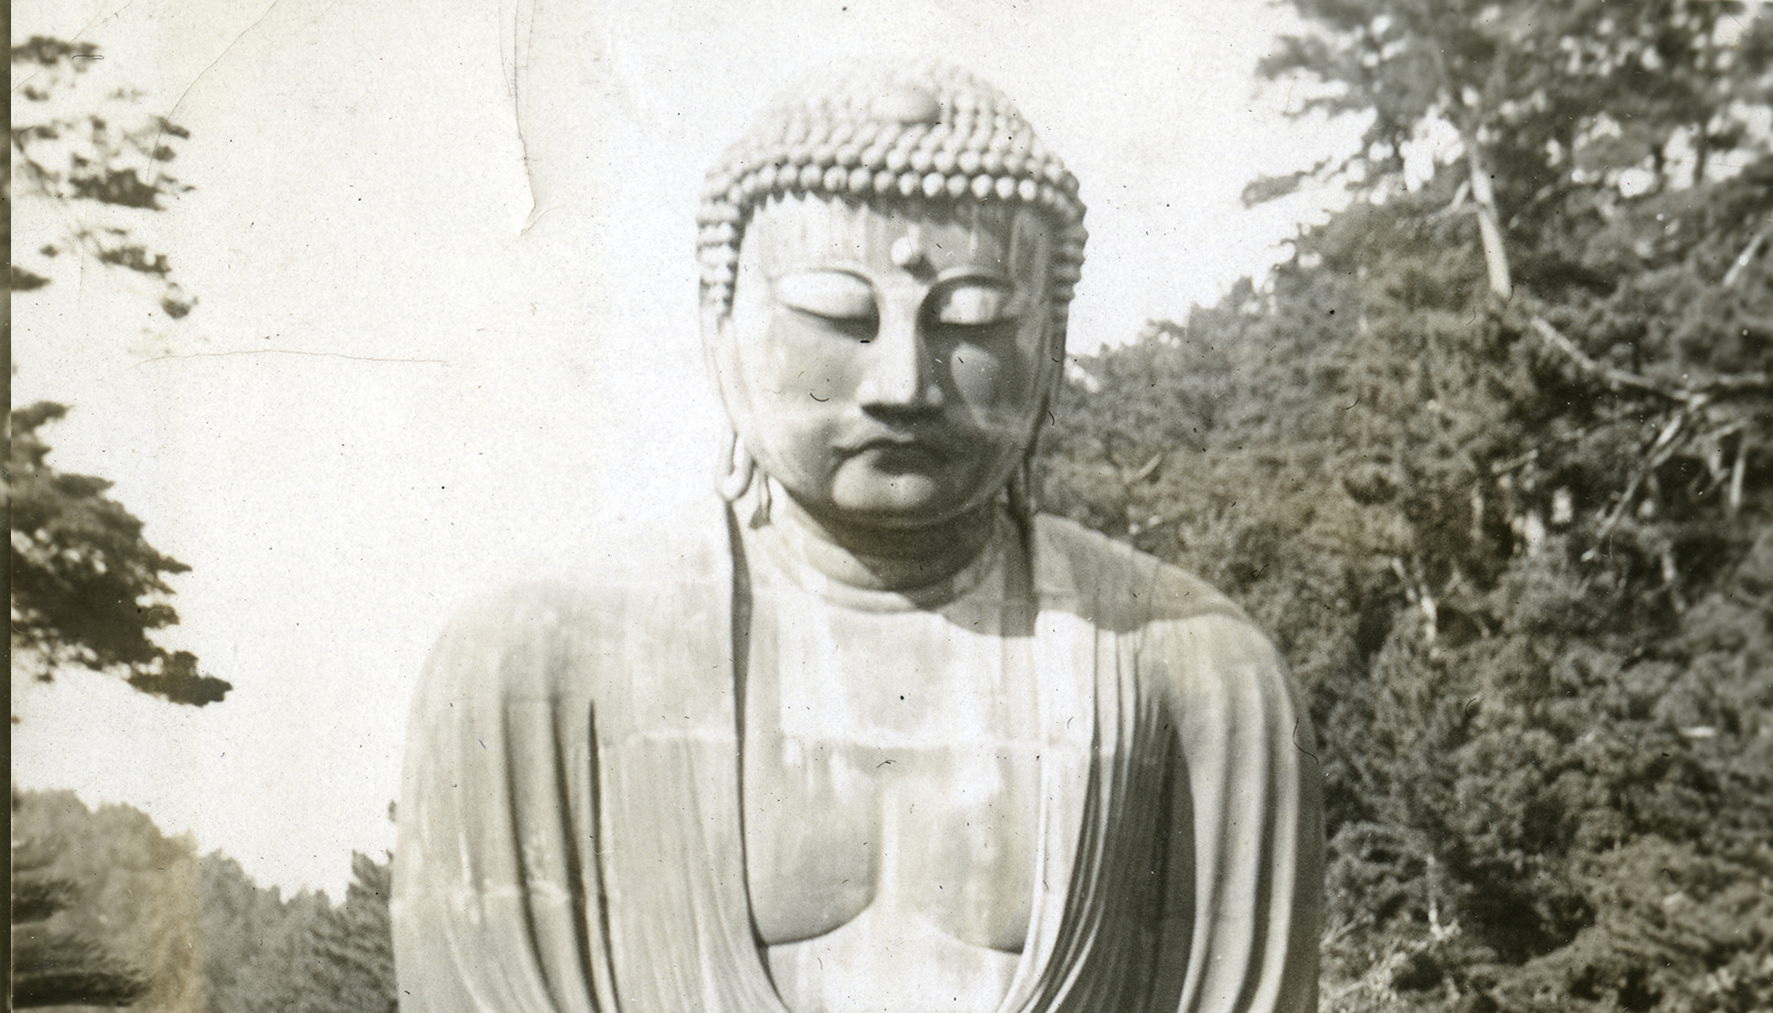 Buddha statue in Kamakur, Japan, 1930. Florence Cottingham seated in the rickshaw.